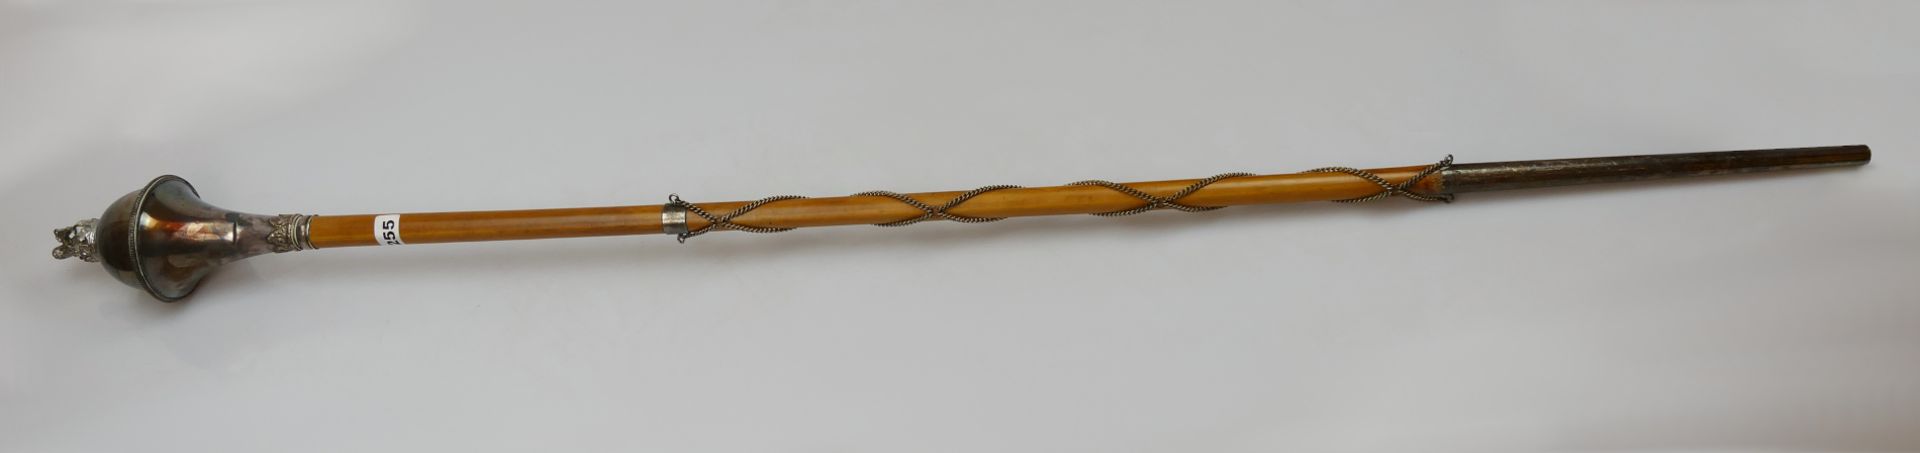 1 Tambourmajorstock Holz/wohl Metall versilbert mit Bekrönung "Englischer Löwe" H ca.147cm, - Image 3 of 4